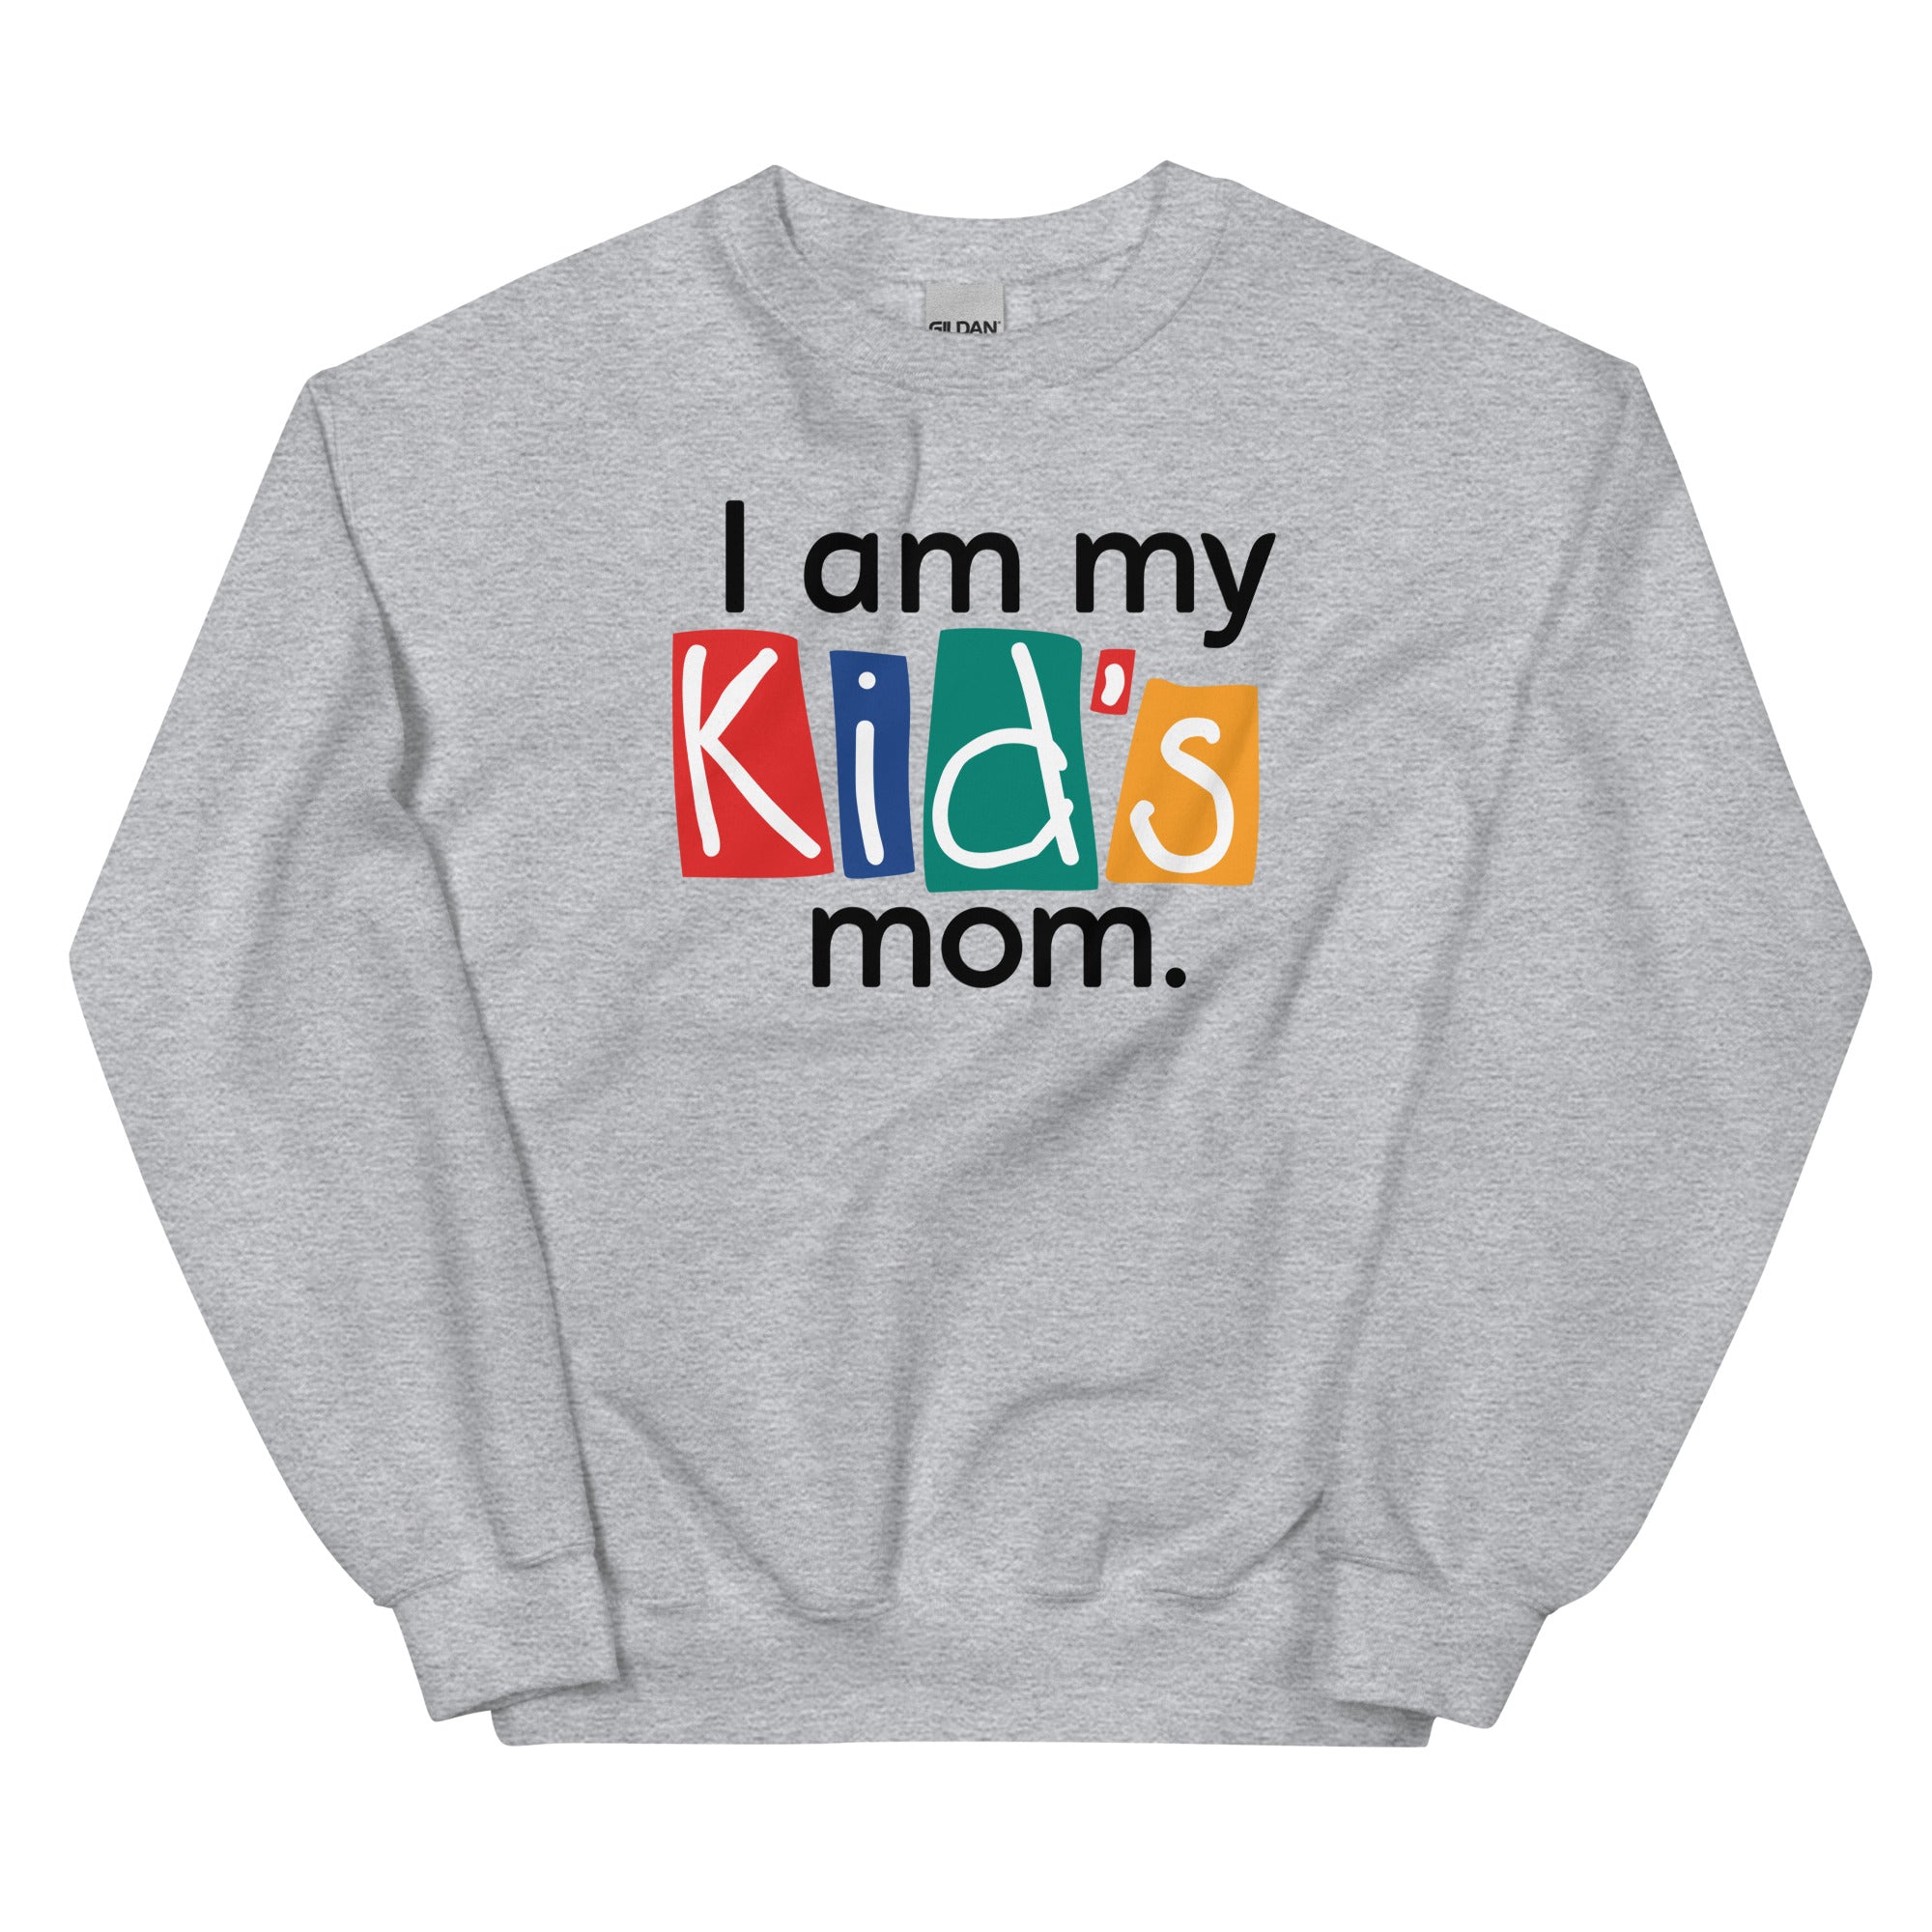 Dr. Laura: My Kid's Mom Sweatshirt